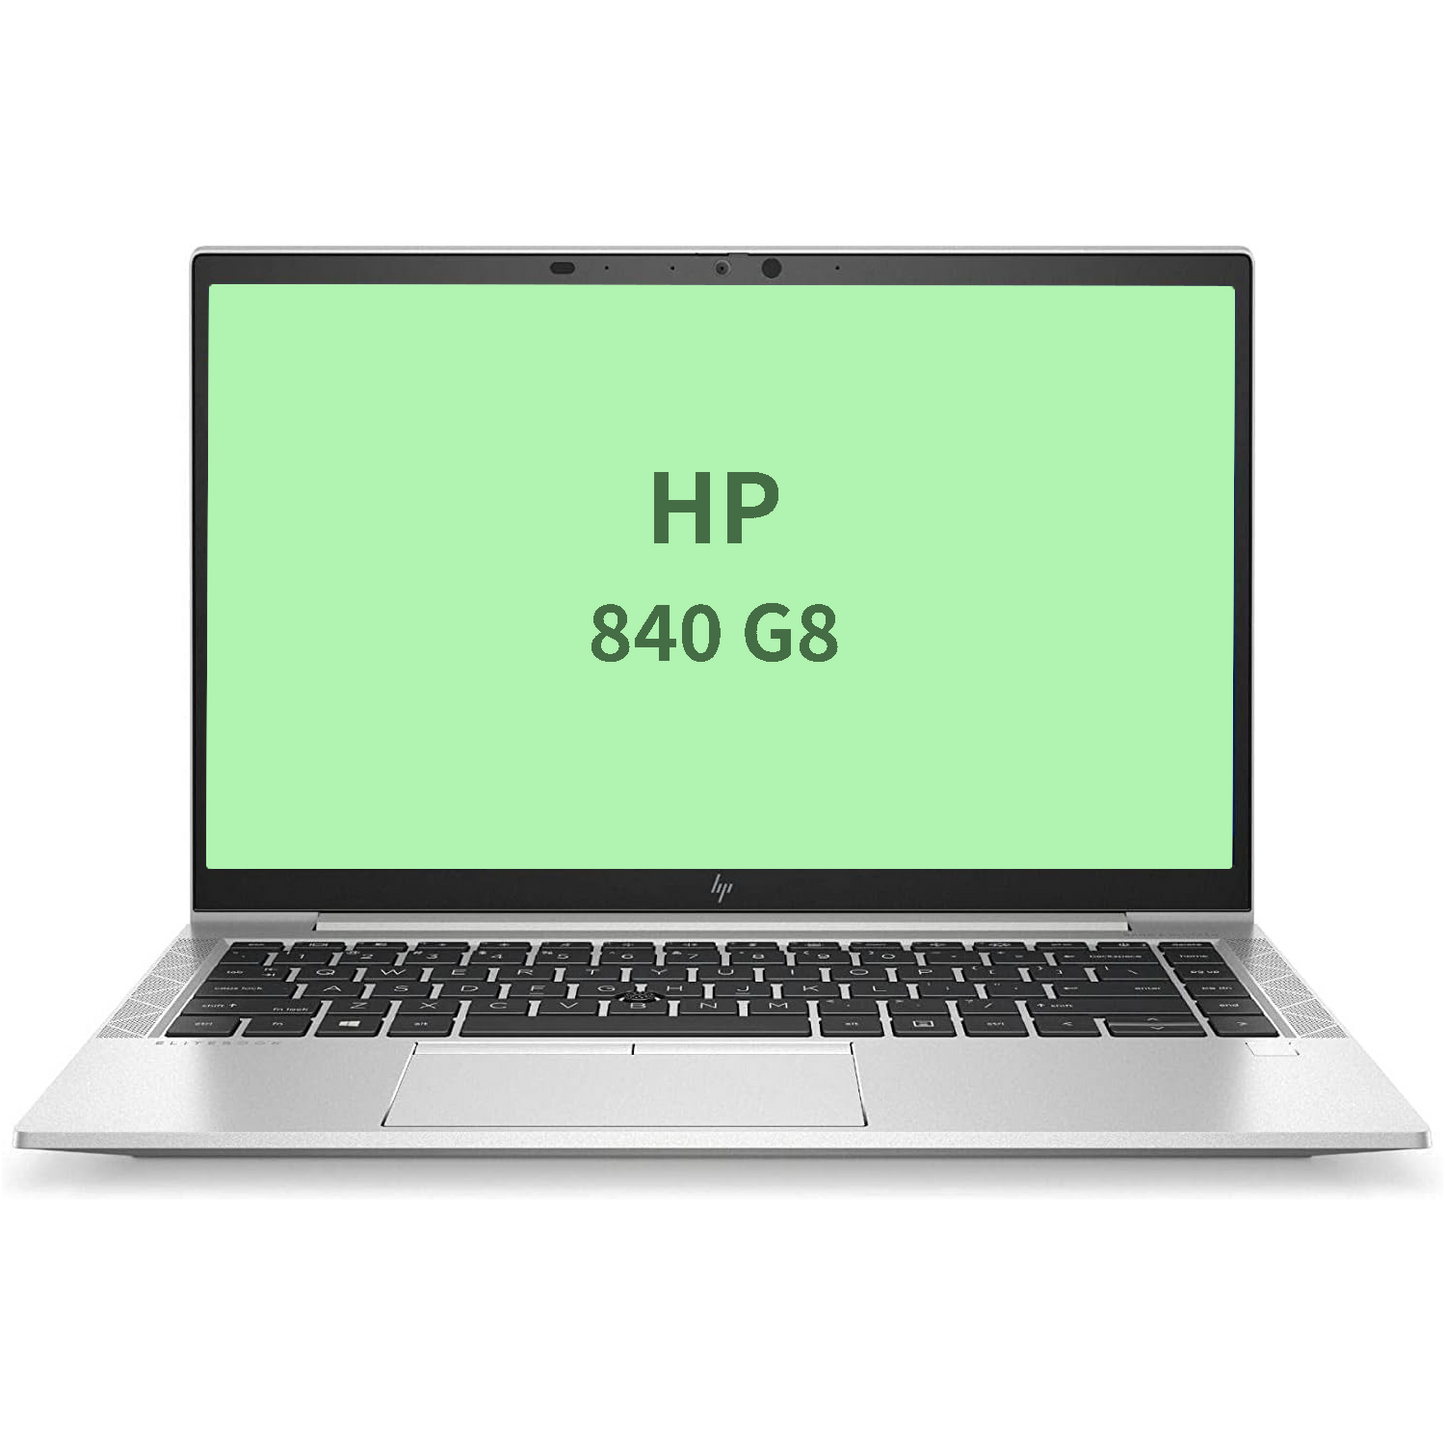 HP 840 G8